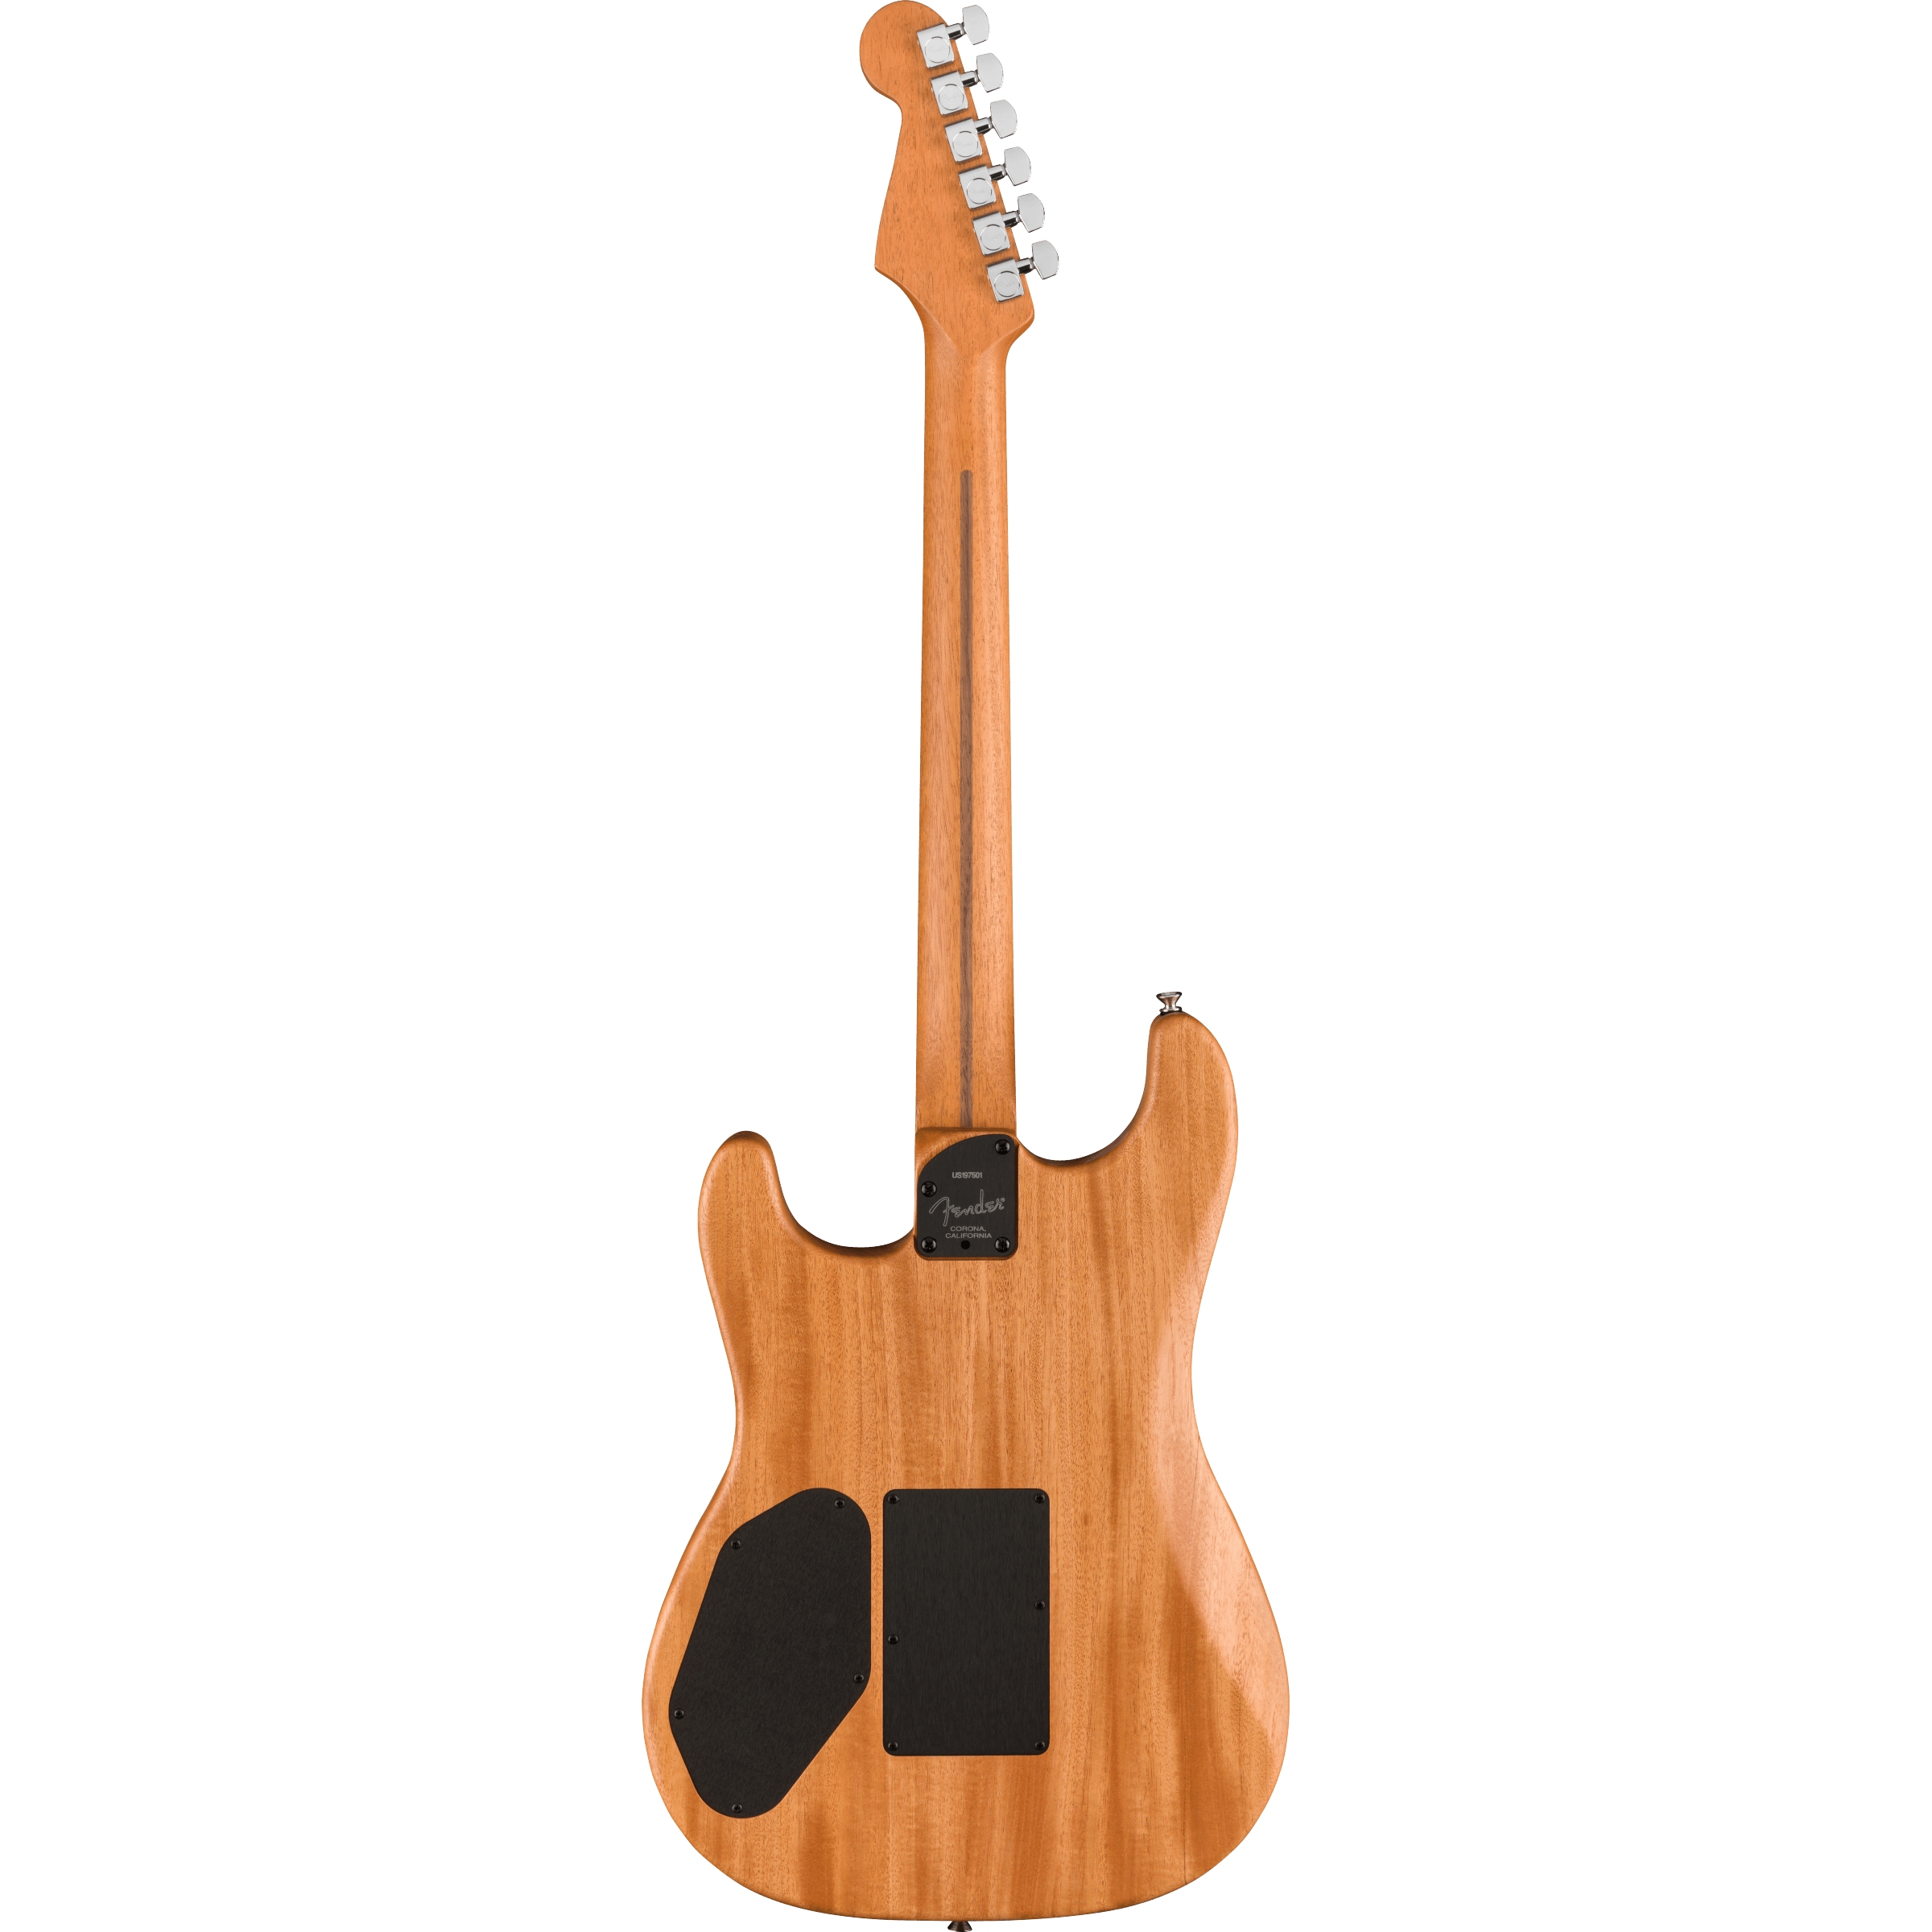 Fender American Acoustasonic Strat Ebony Fingerboard Dakota Red